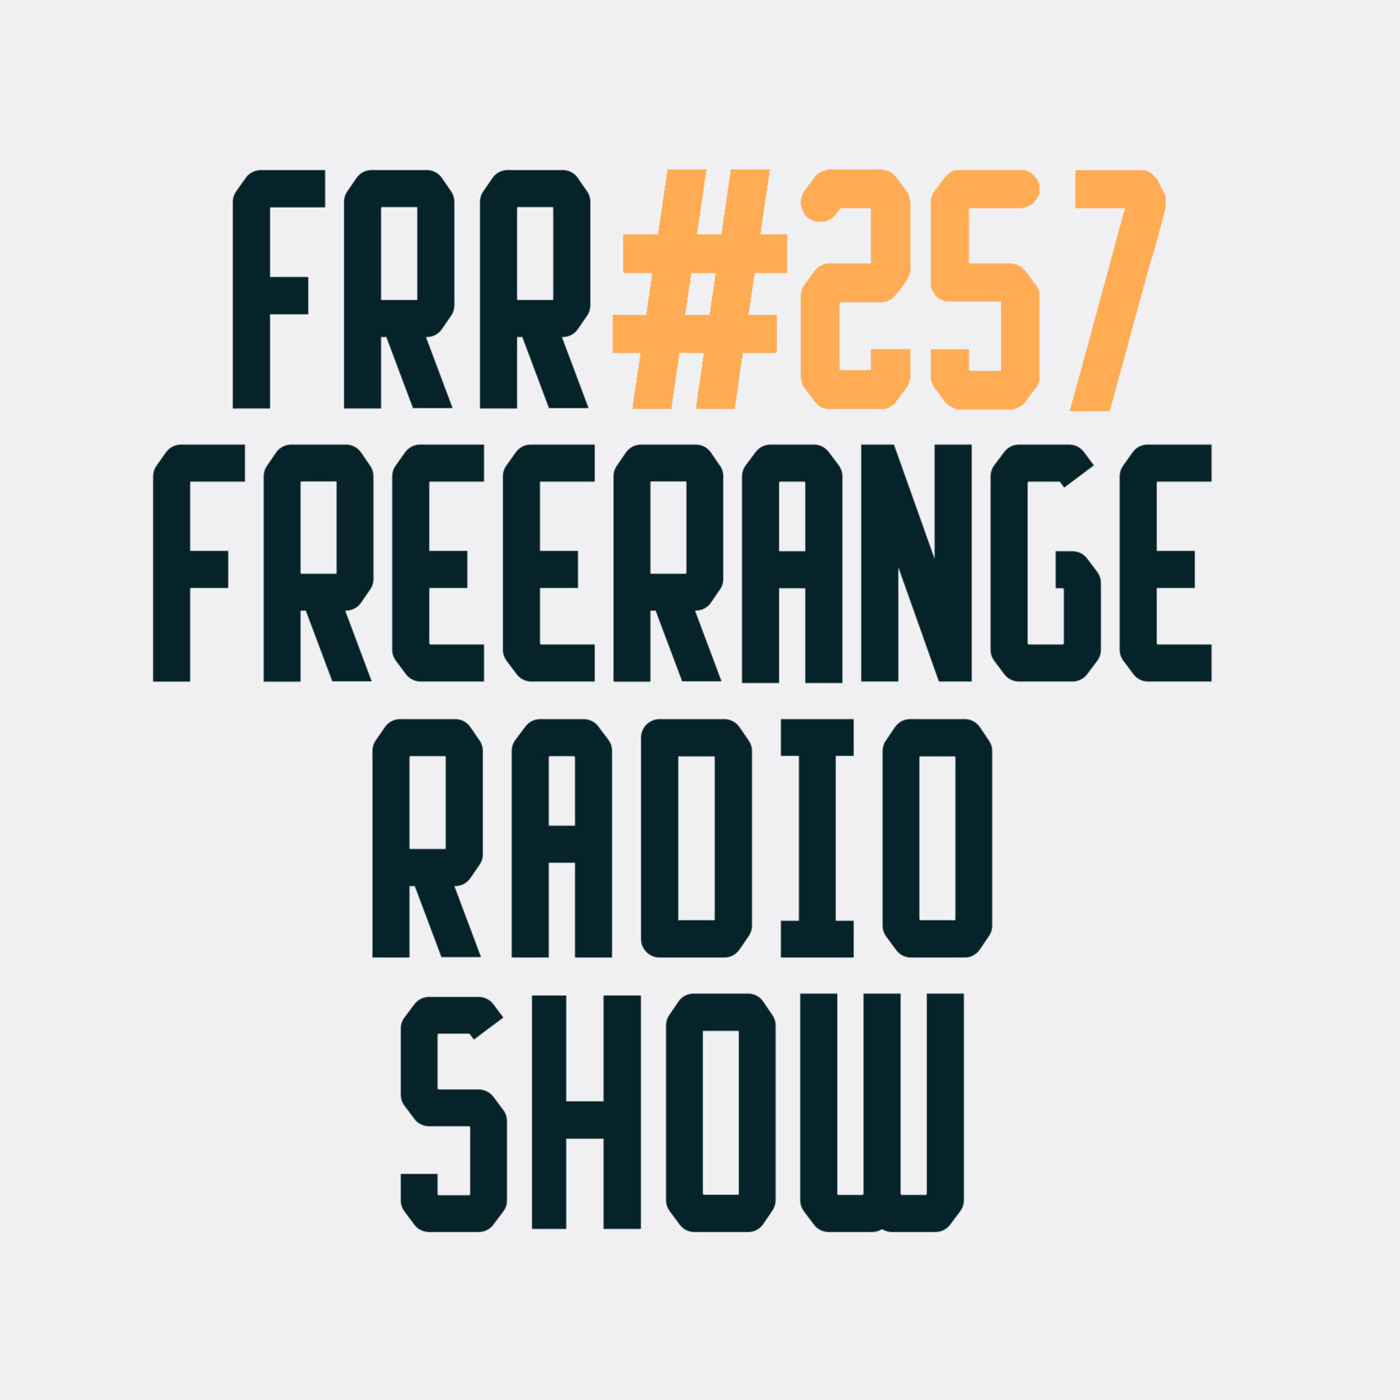 Episode 257: Freerange Records Radioshow No.257 - February 2023 With Matt Masters